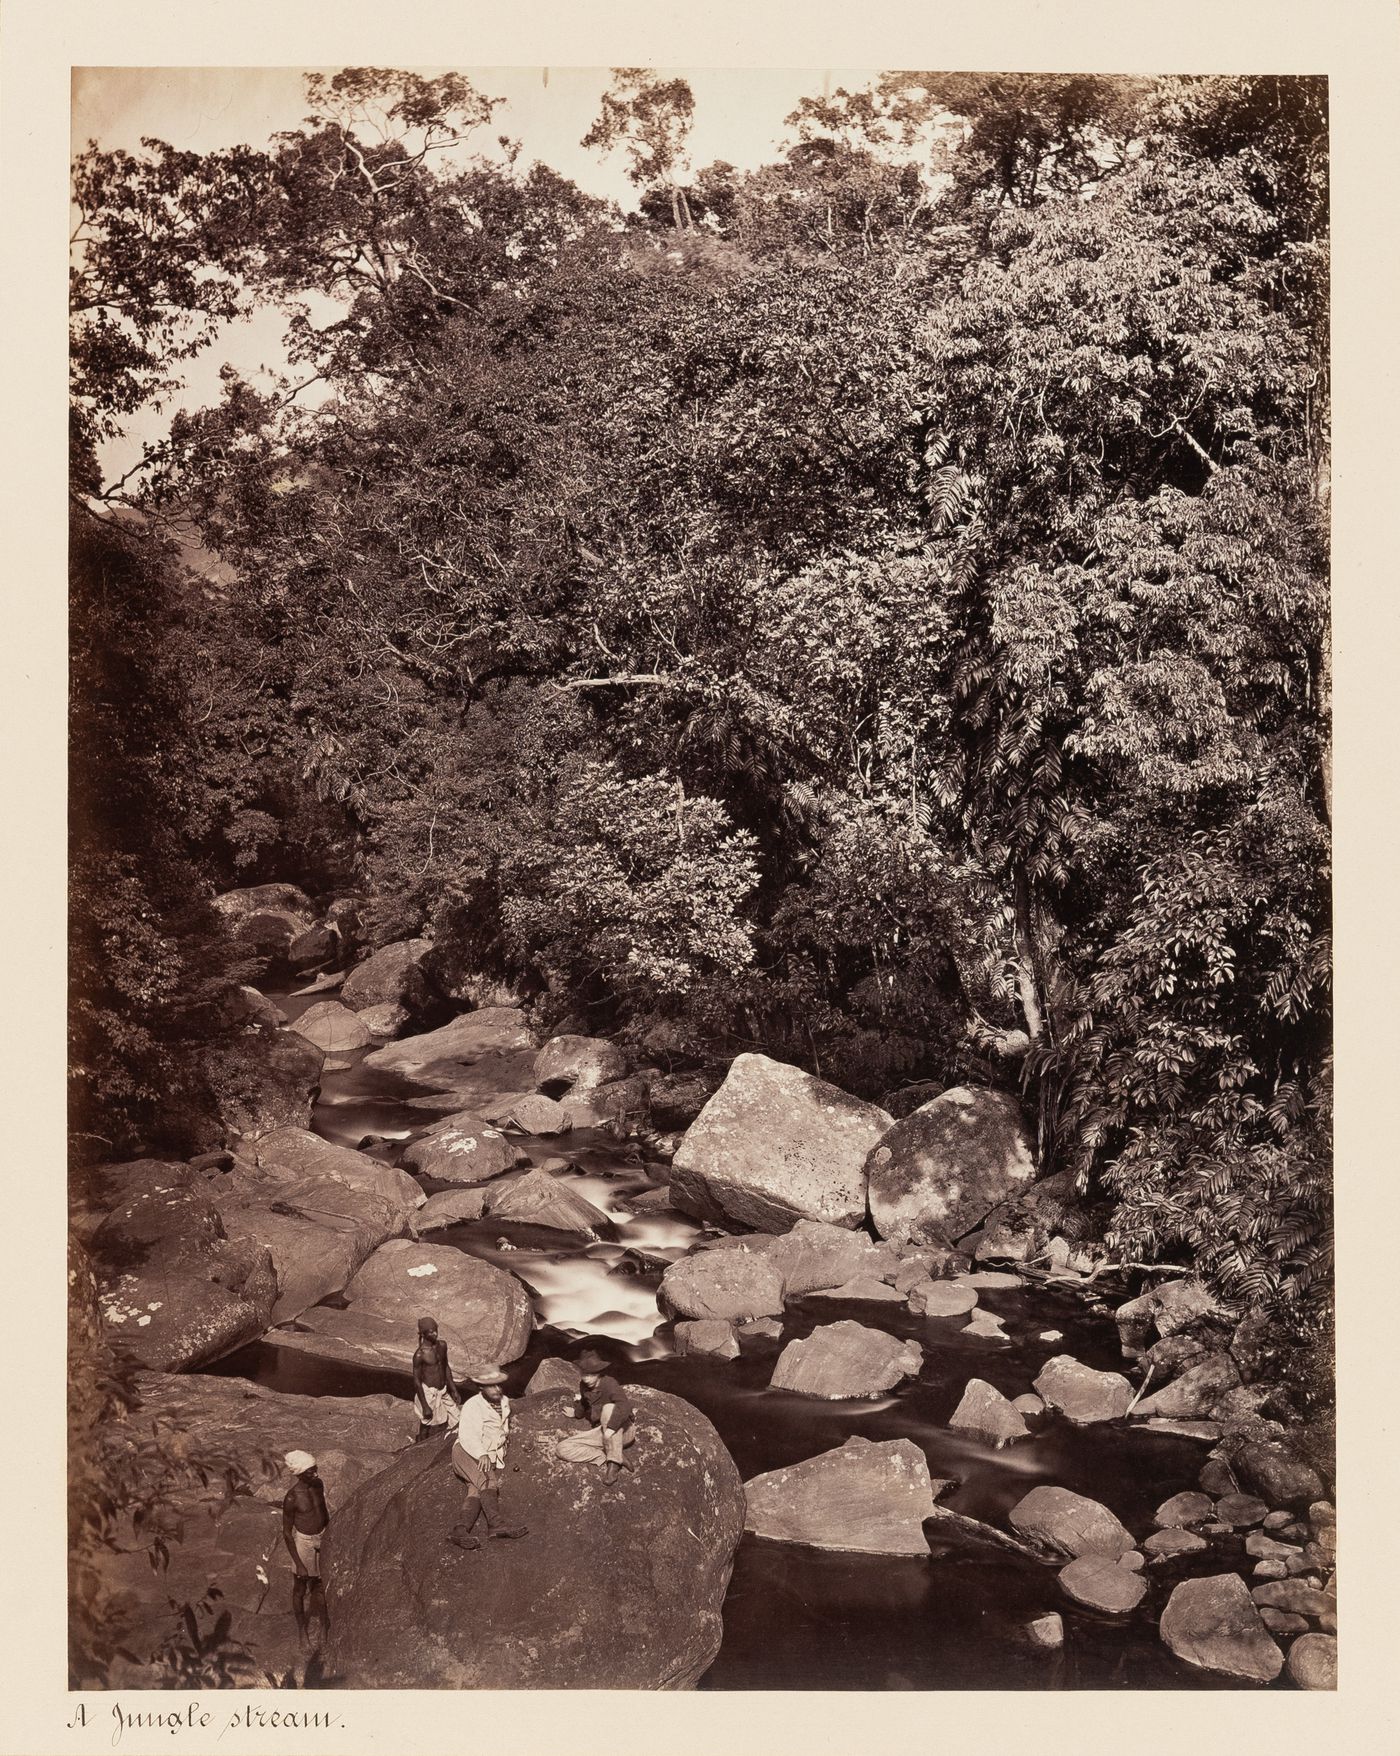 View of men beside a river, Ceylon (now Sri Lanka)